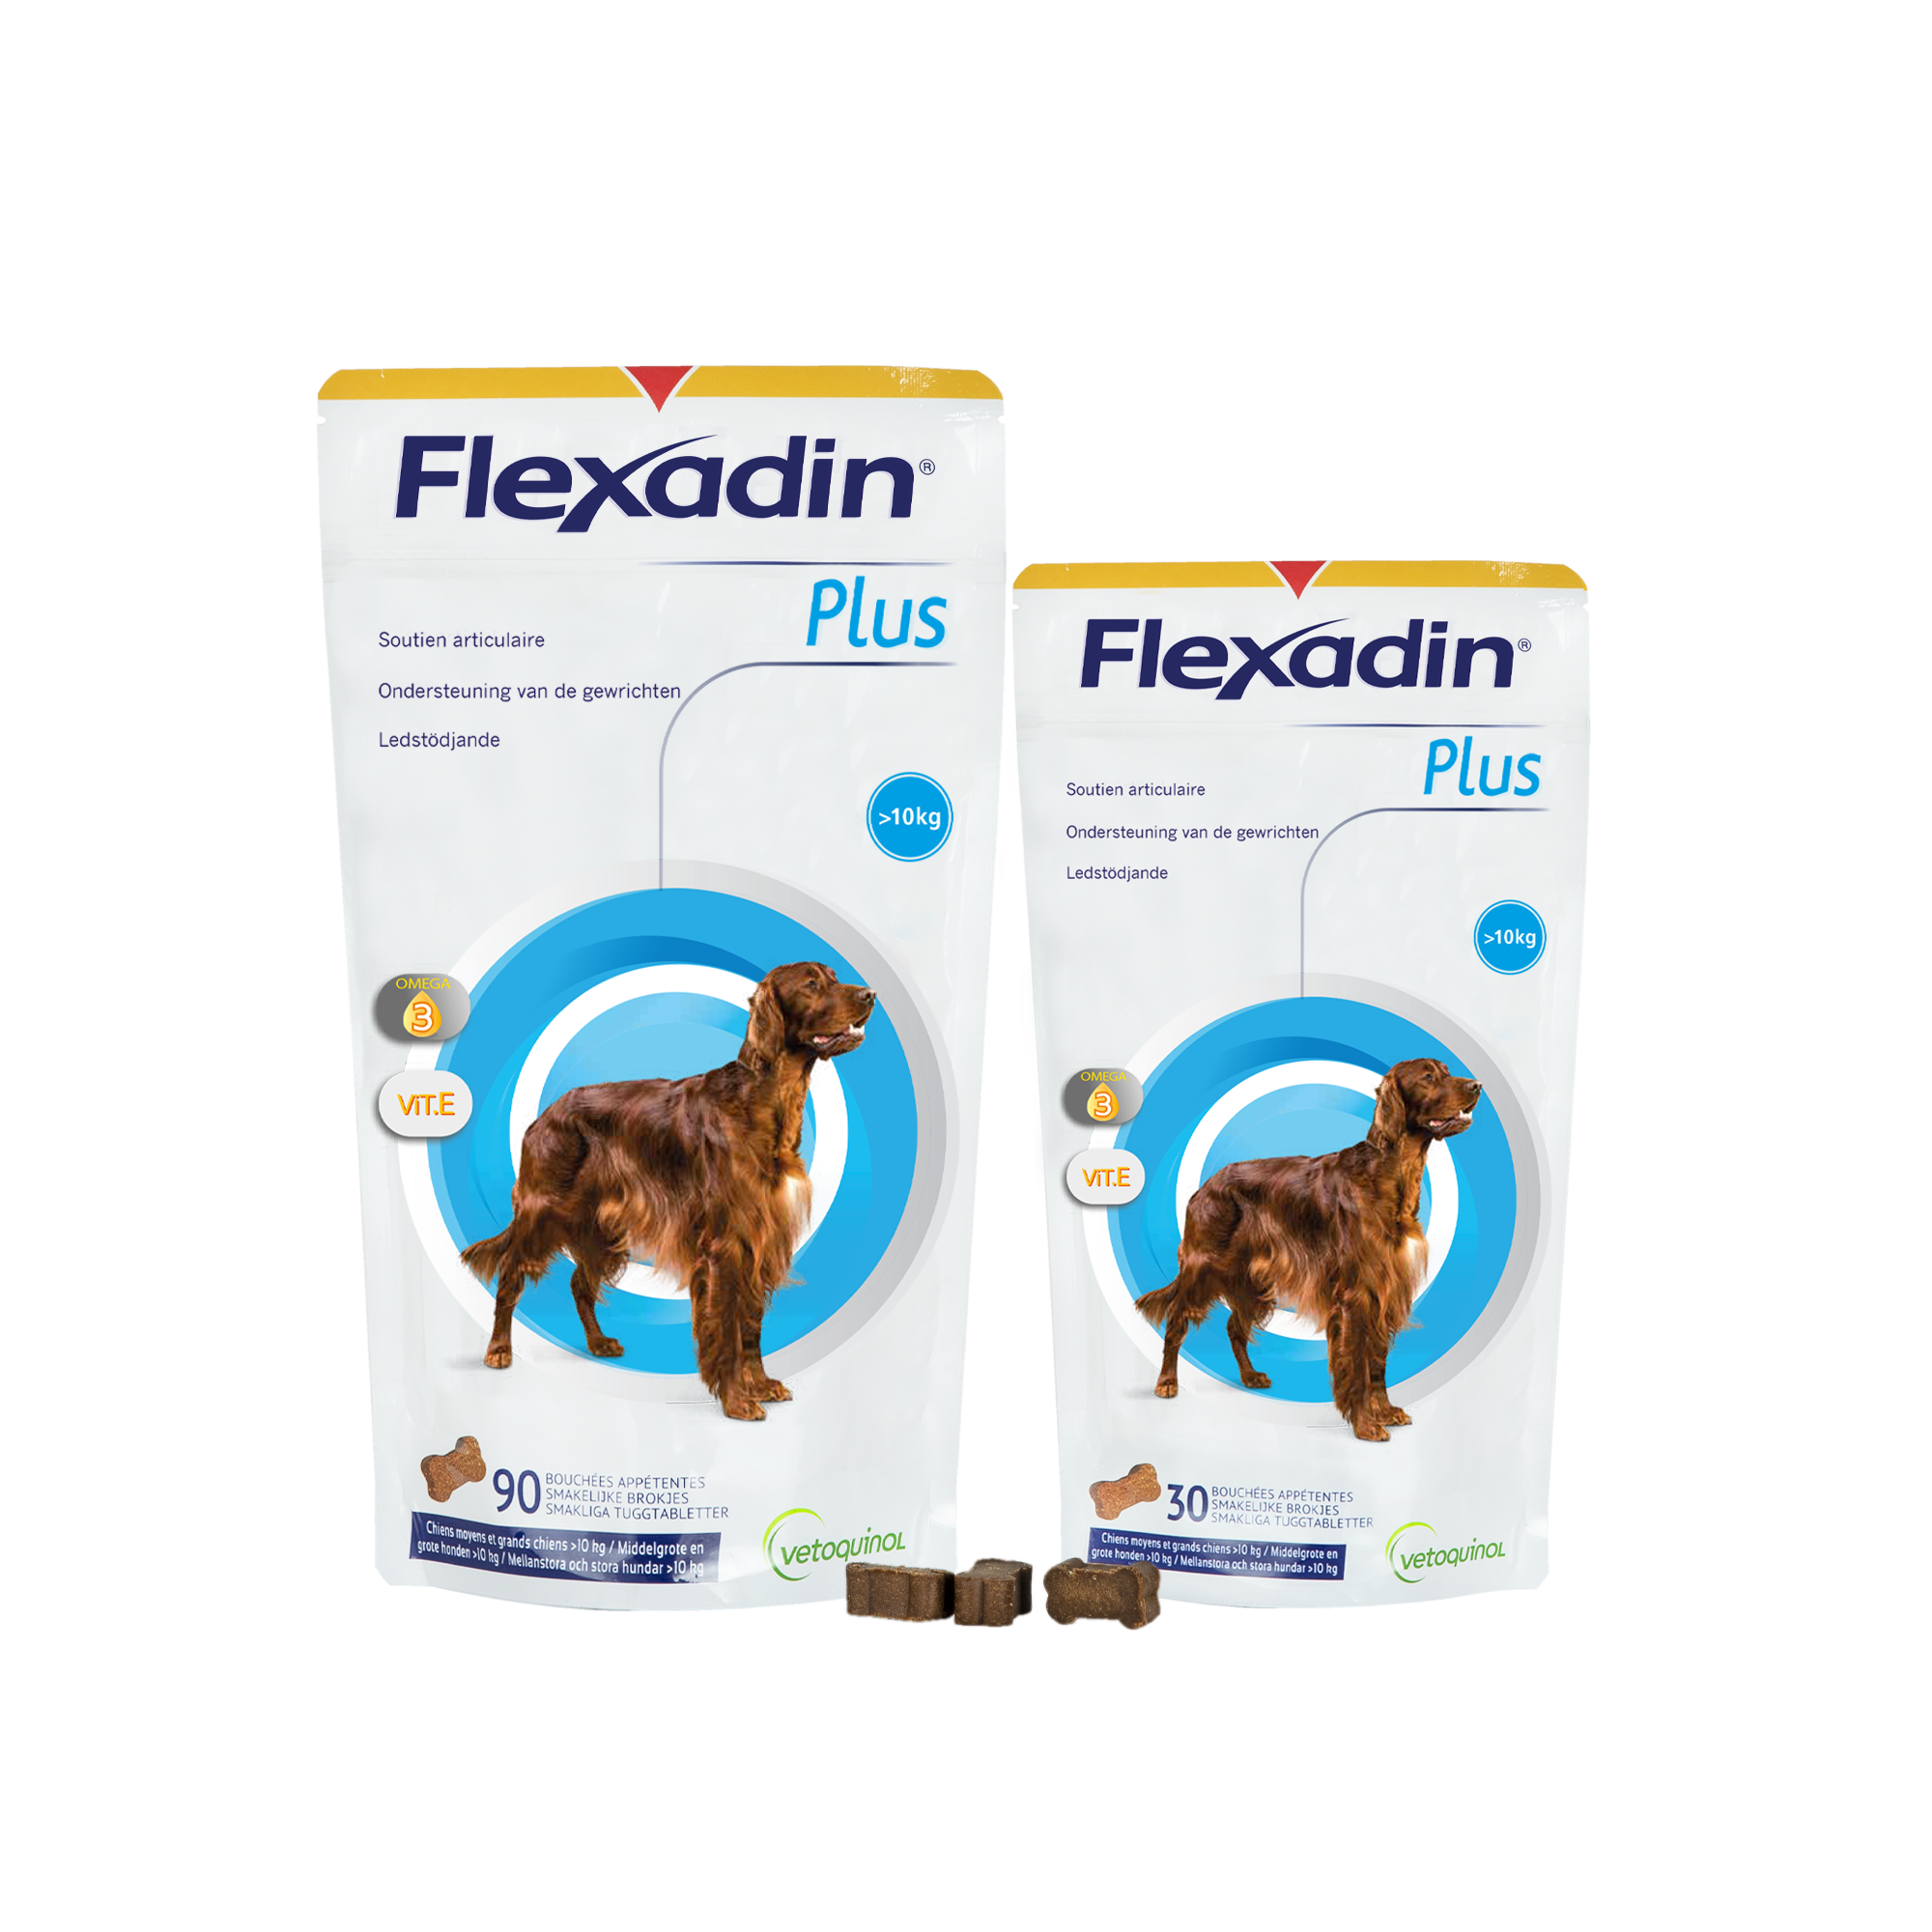 Flexadin Advanced Boswellia bouchées pour chien - Articulations